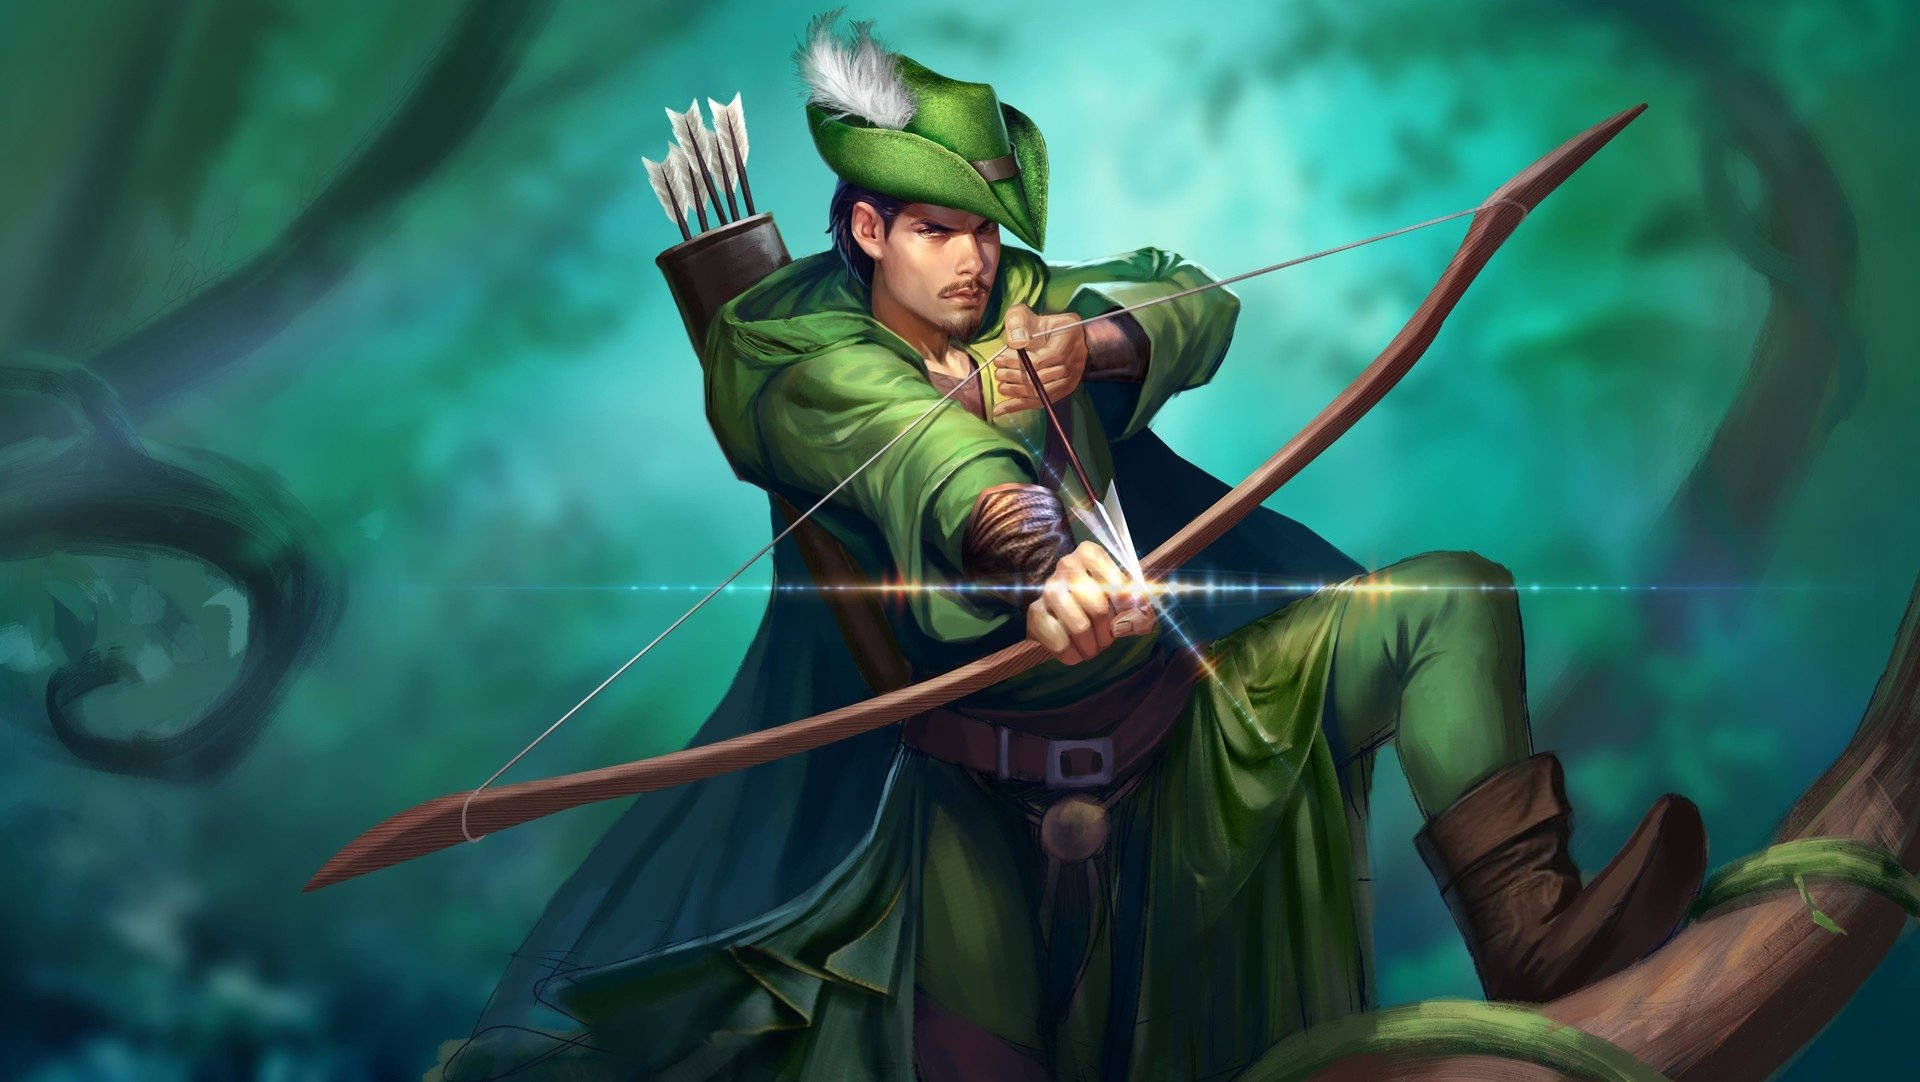 Archery Robin Hood Digital Art Wallpaper